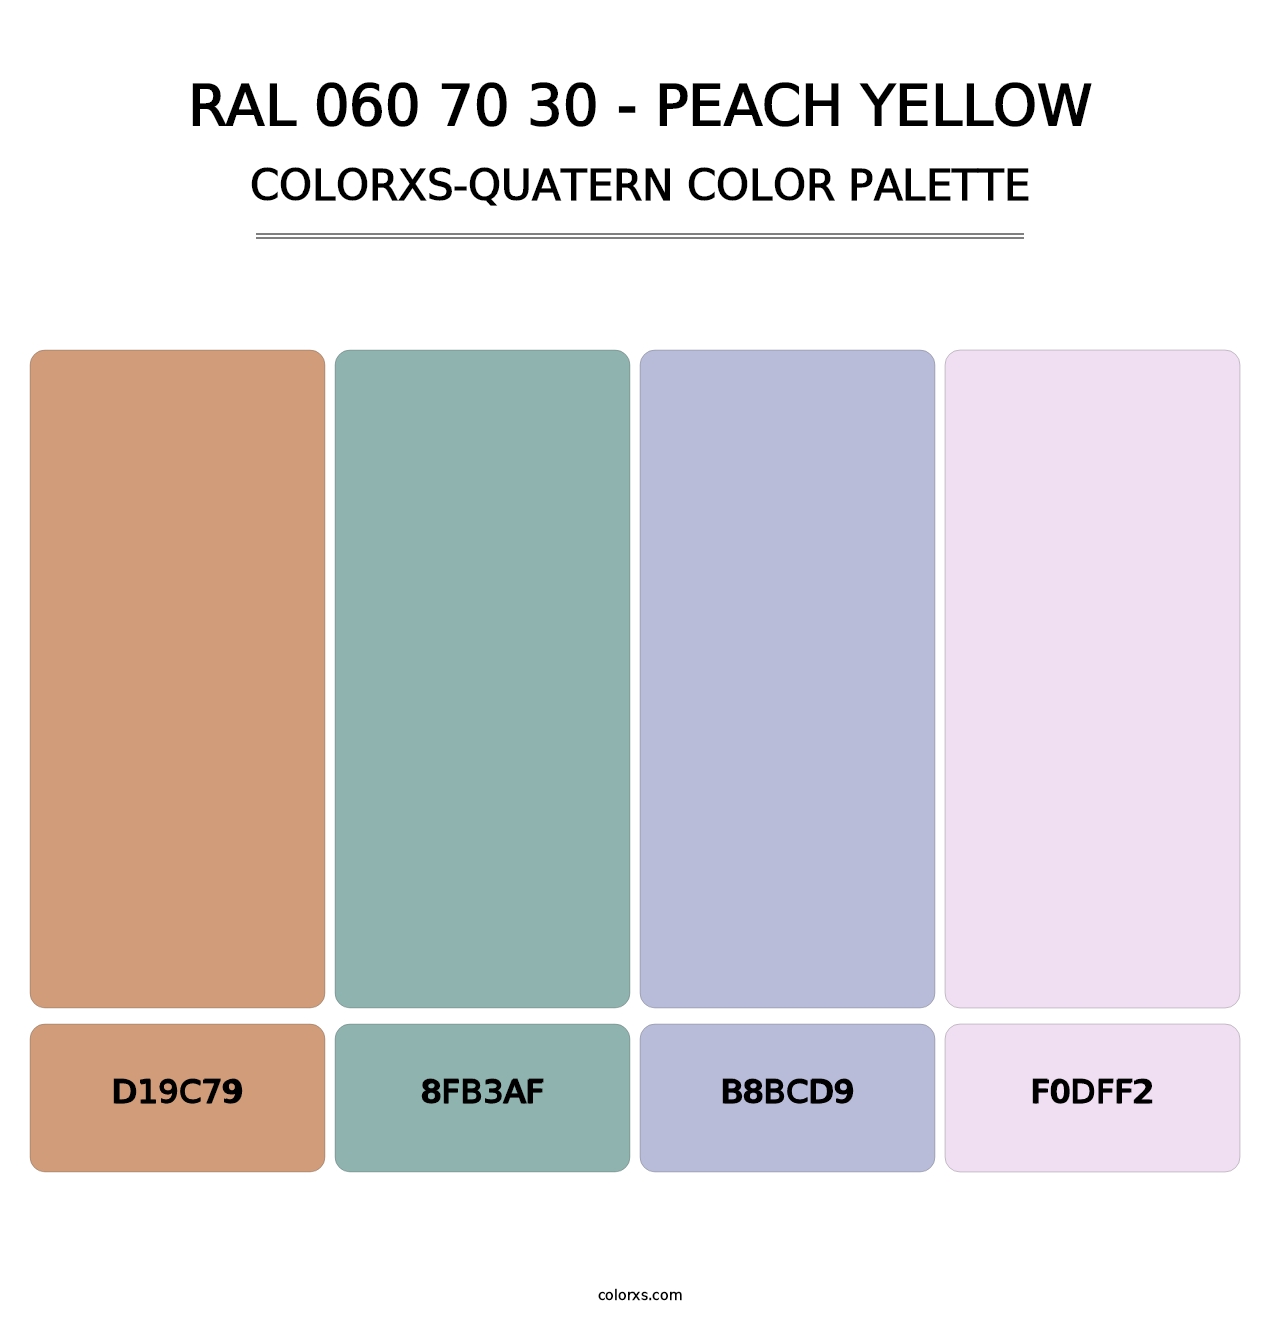 RAL 060 70 30 - Peach Yellow - Colorxs Quatern Palette